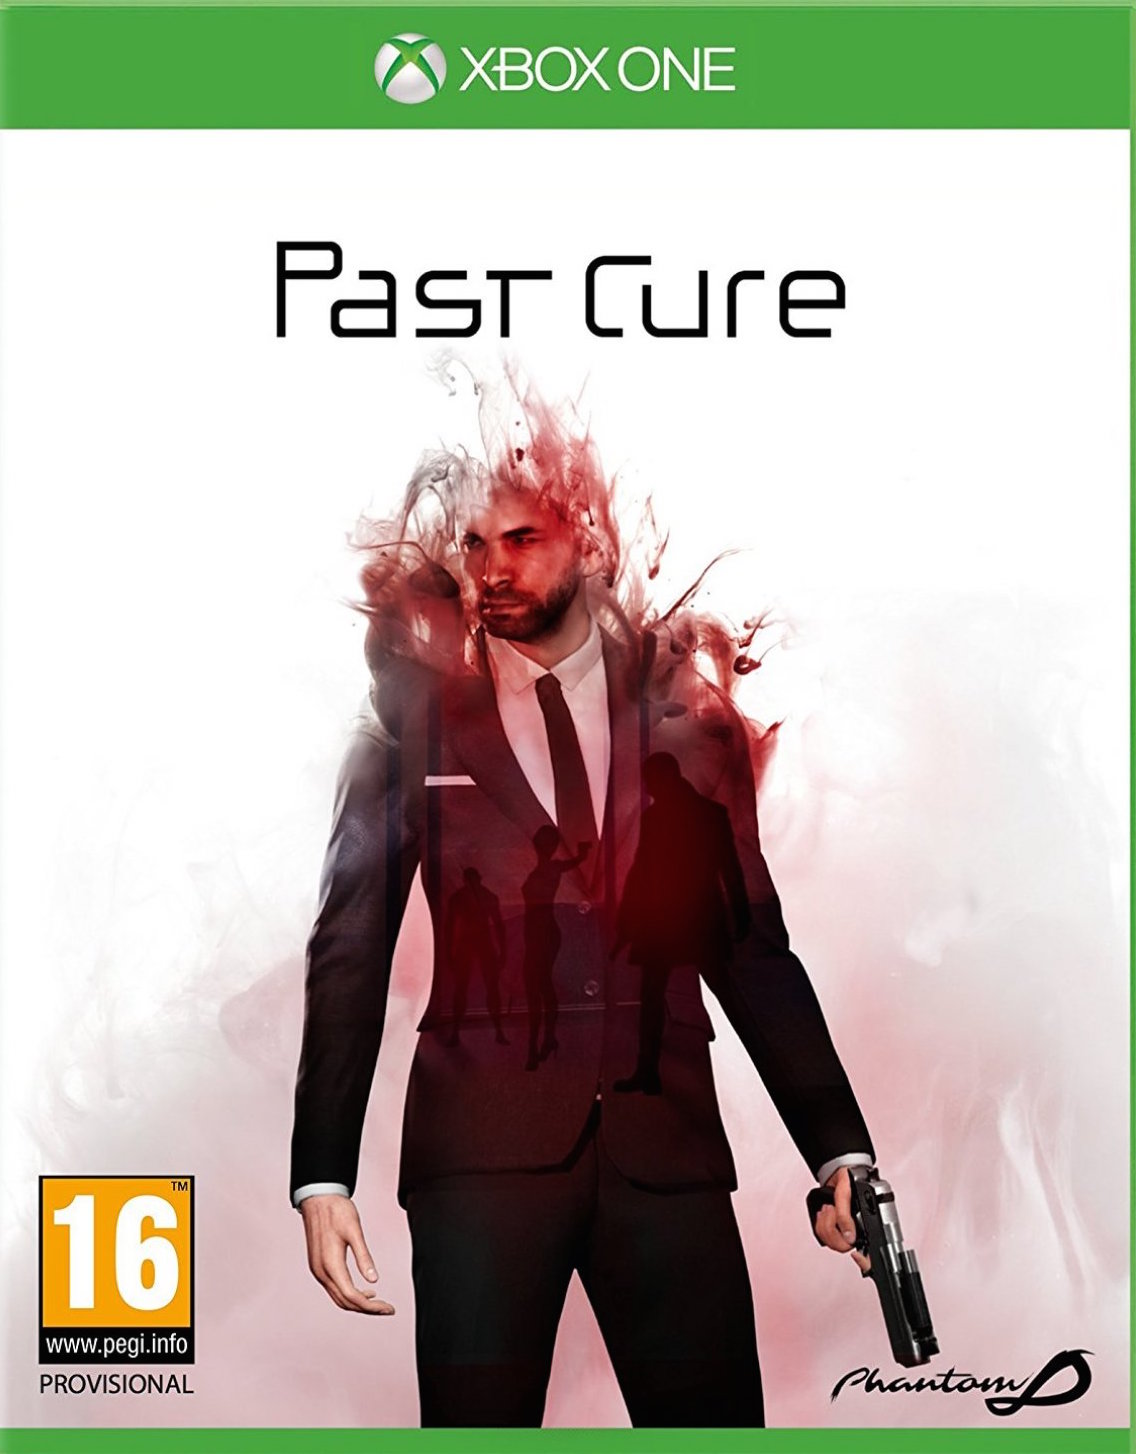 Past Cure (Xbox One), Phantom D